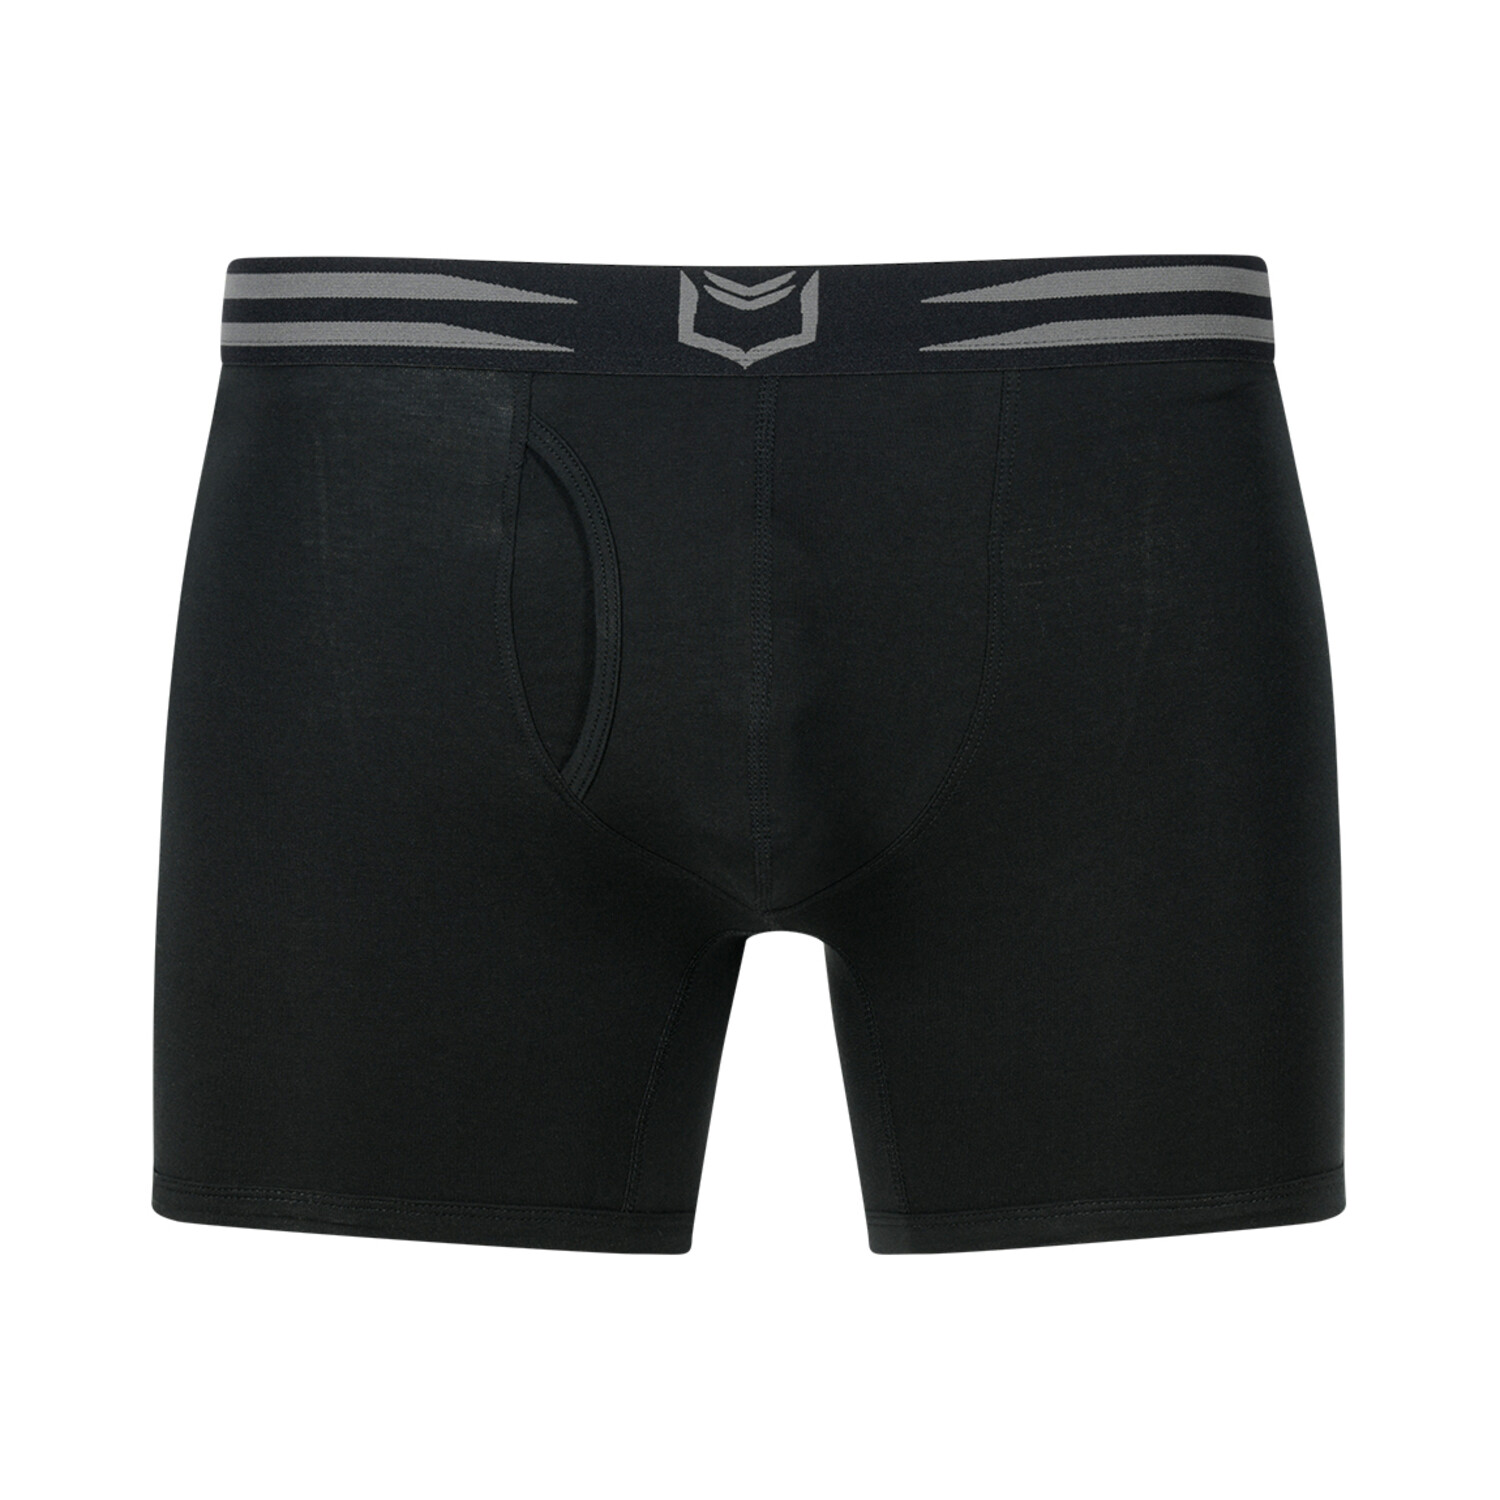 SHEATH 4.0 Cotton Men's Dual Pouch Boxer Brief // Black + Gray (X